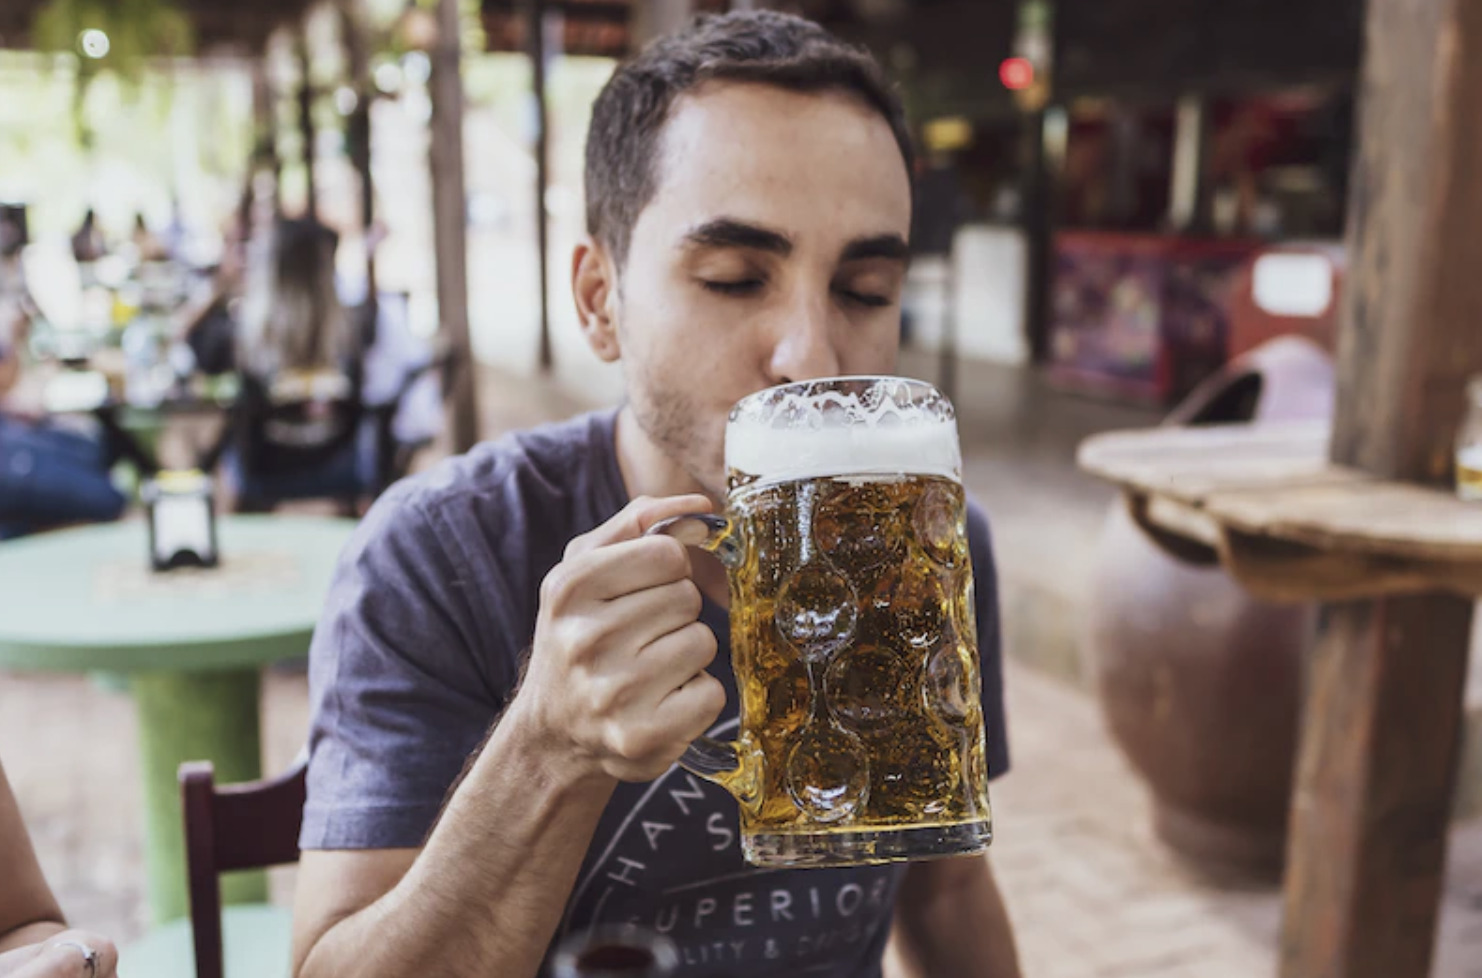 Chili's Now Has Dirk Nowitzki-Inspired Beer - Local Profile